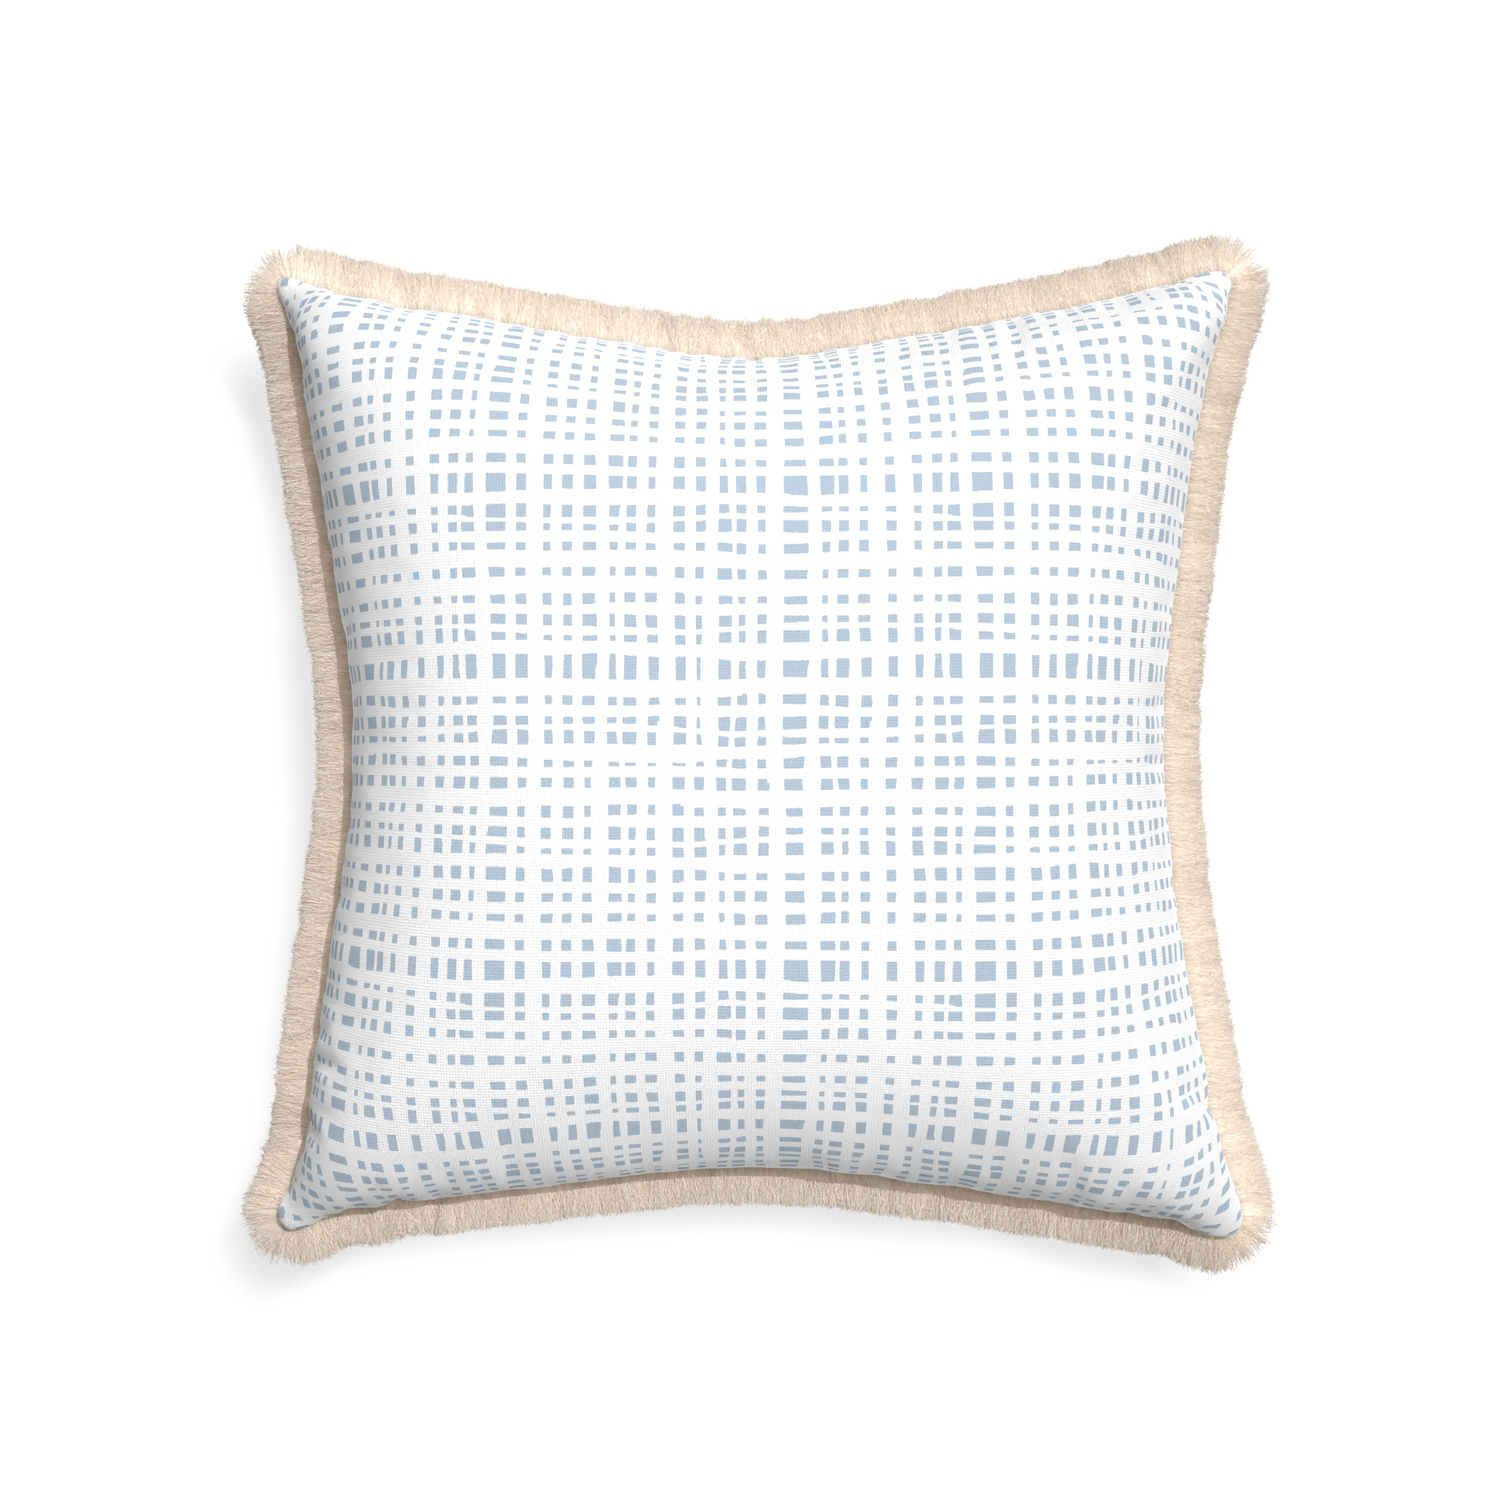 22-square ginger sky custom pillow with cream fringe on white background